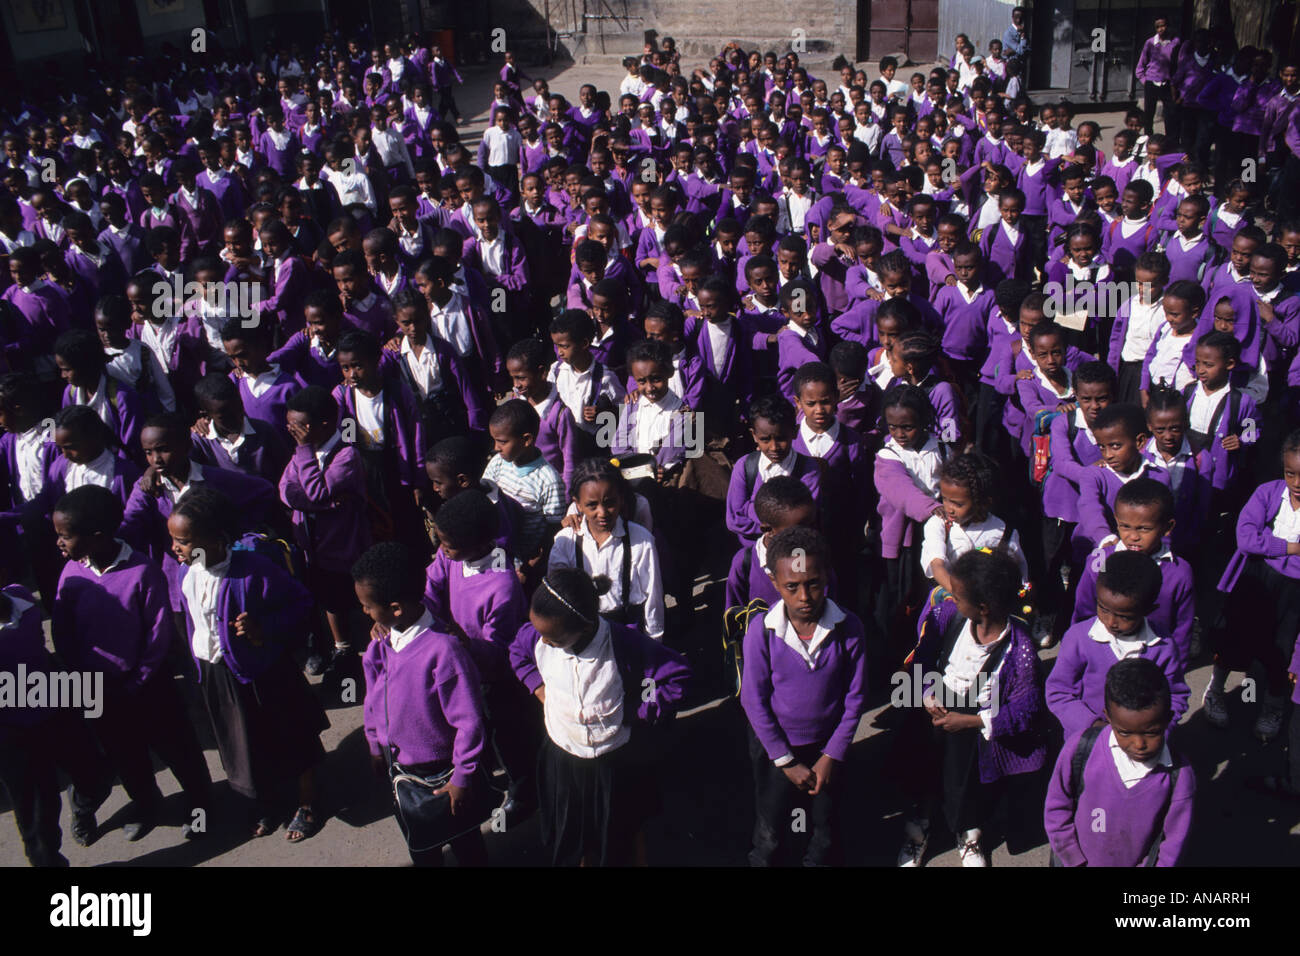 Secondary School In Addis Ababa Ethiopia ANARRH 